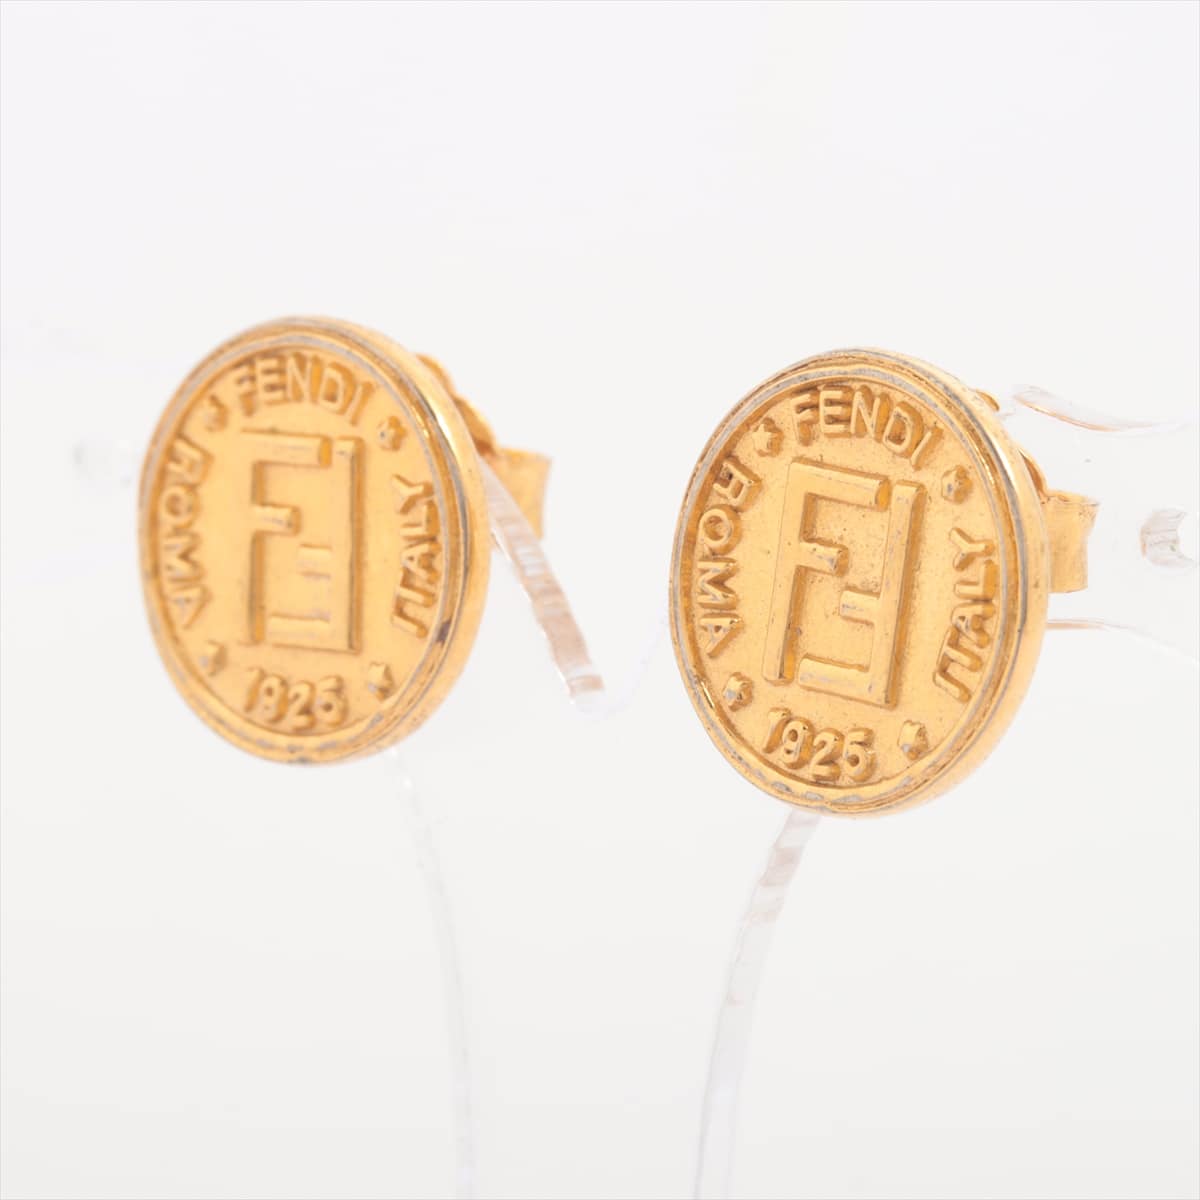 Fendi Logo Piercing jewelry (for both ears) GP Gold